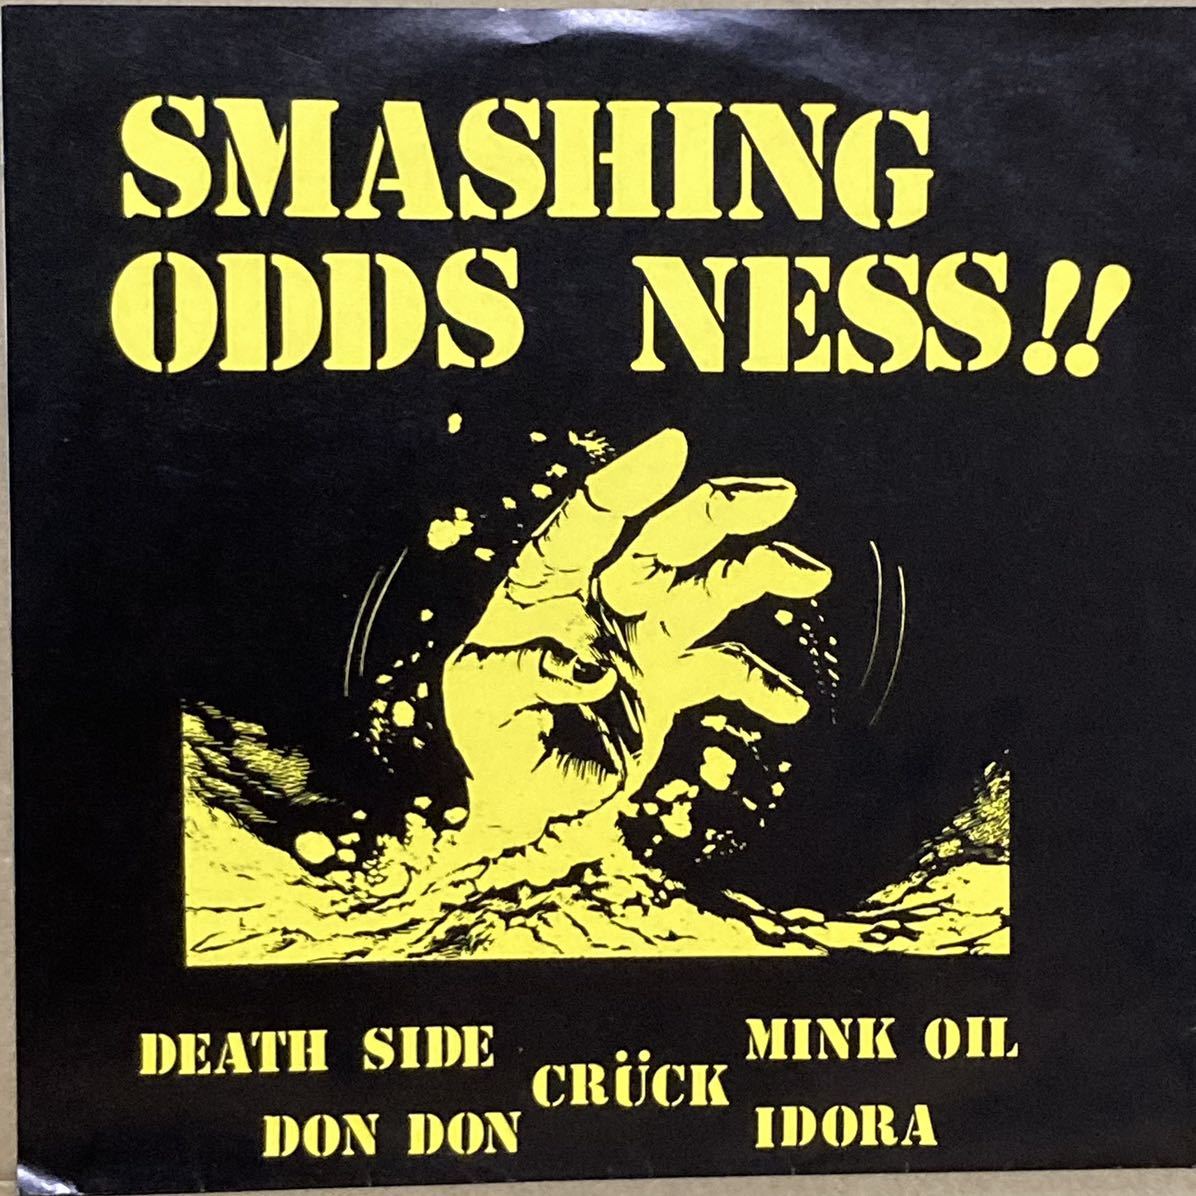 Smashing Odds Ness!! death side dondon パンク ハードコア punk hardcore gism